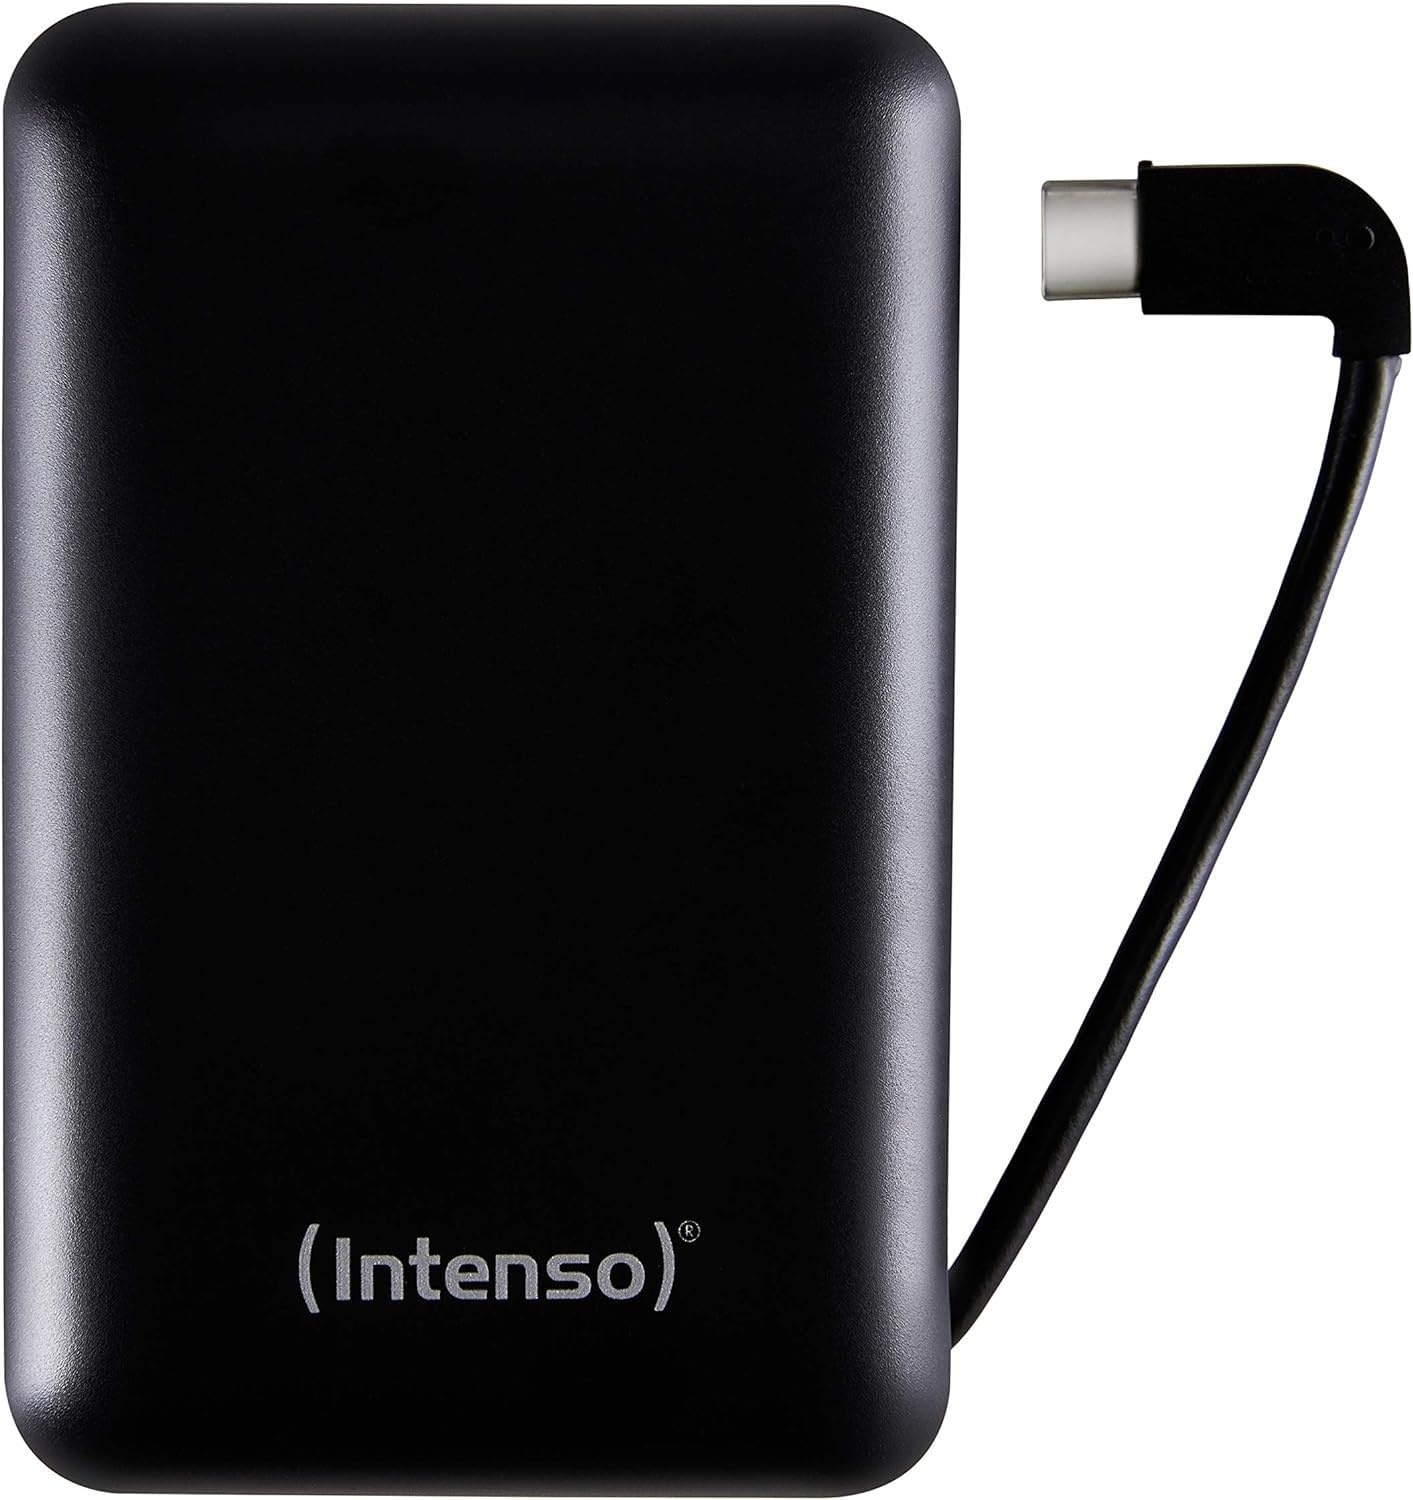 Intenso 7314530 Powerbank XC10000, externes Ladegerät, integriertes USB Type C Ladekabel (10000mAh, geeignet für Smartphone/Tablet PC/MP3 Player/Digitalkamera) schwarz